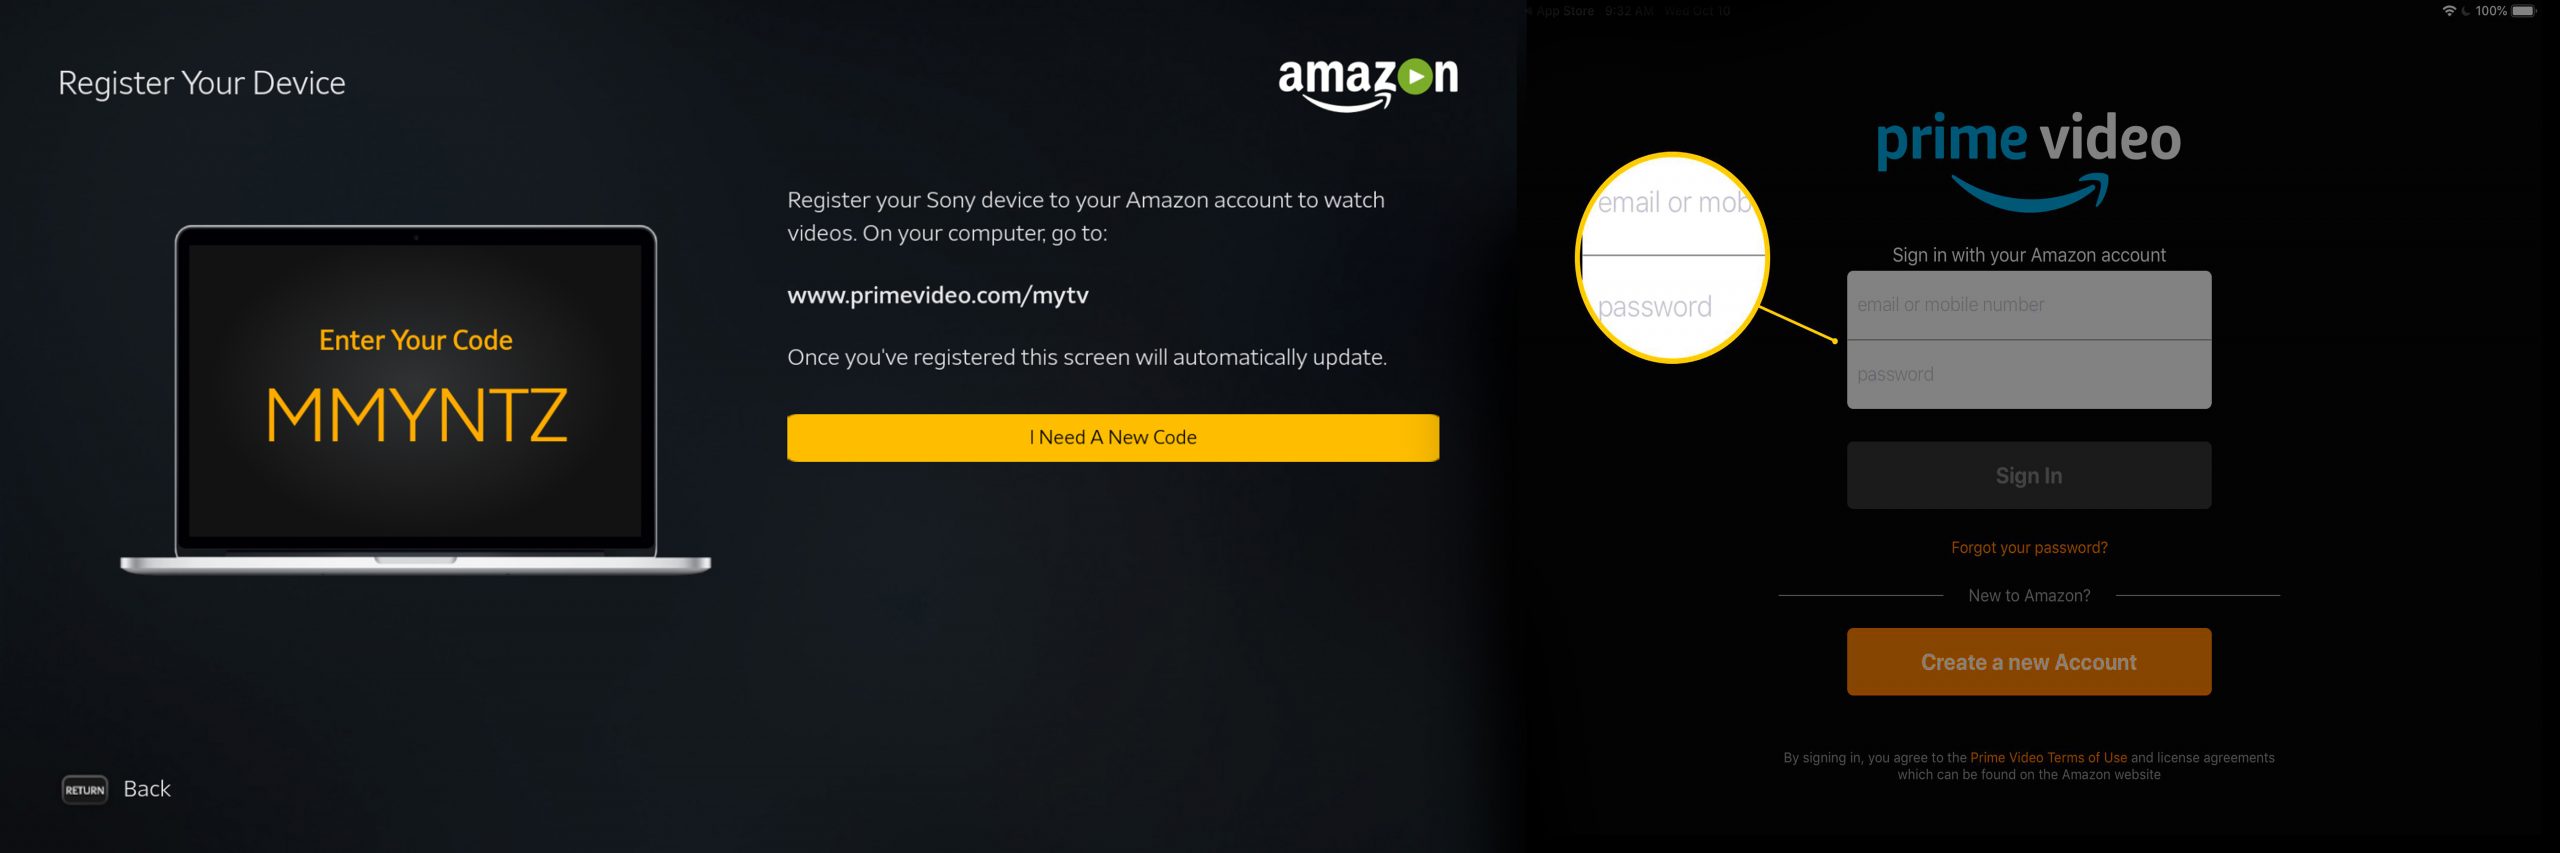 Amazon.com/mytv - Enter Code Here to Activate Amazon Prime Video App